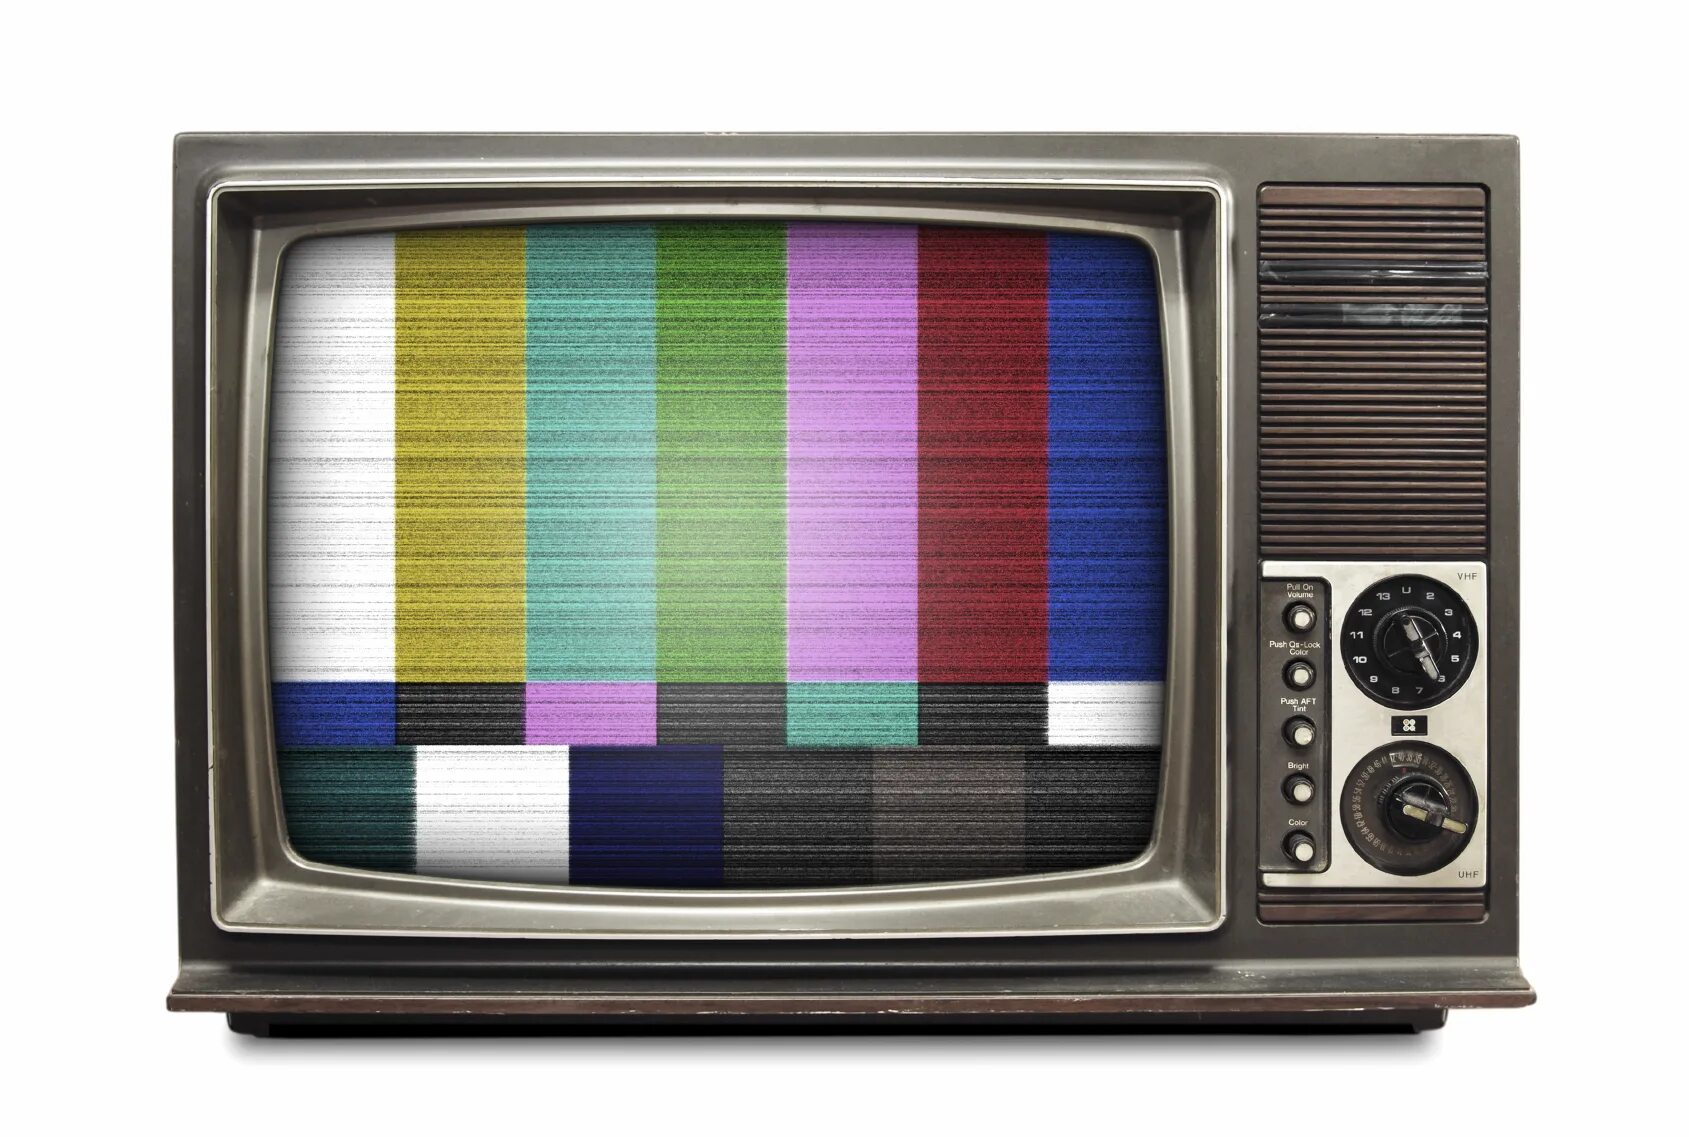 Телевизор другой канал. Старый телевизор. Экран телевизора. Телевизор с помехами. Разноцветный телевизор.